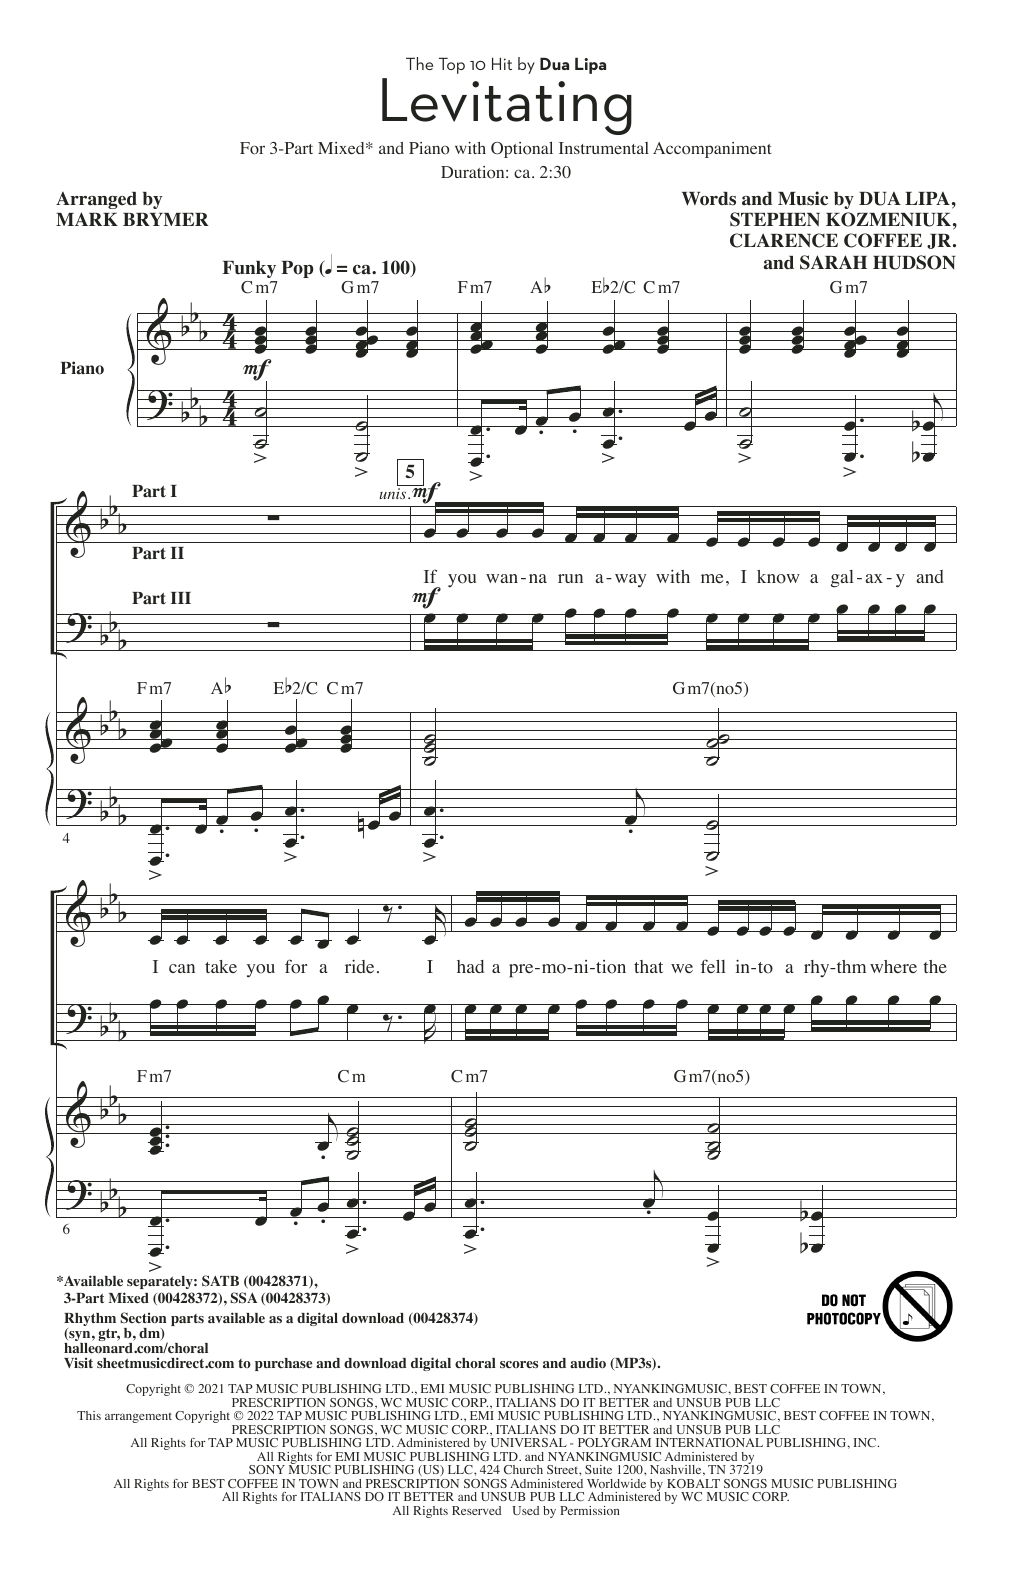 Dua Lipa Levitating (arr. Mark Brymer) Sheet Music Notes & Chords for 3-Part Mixed Choir - Download or Print PDF